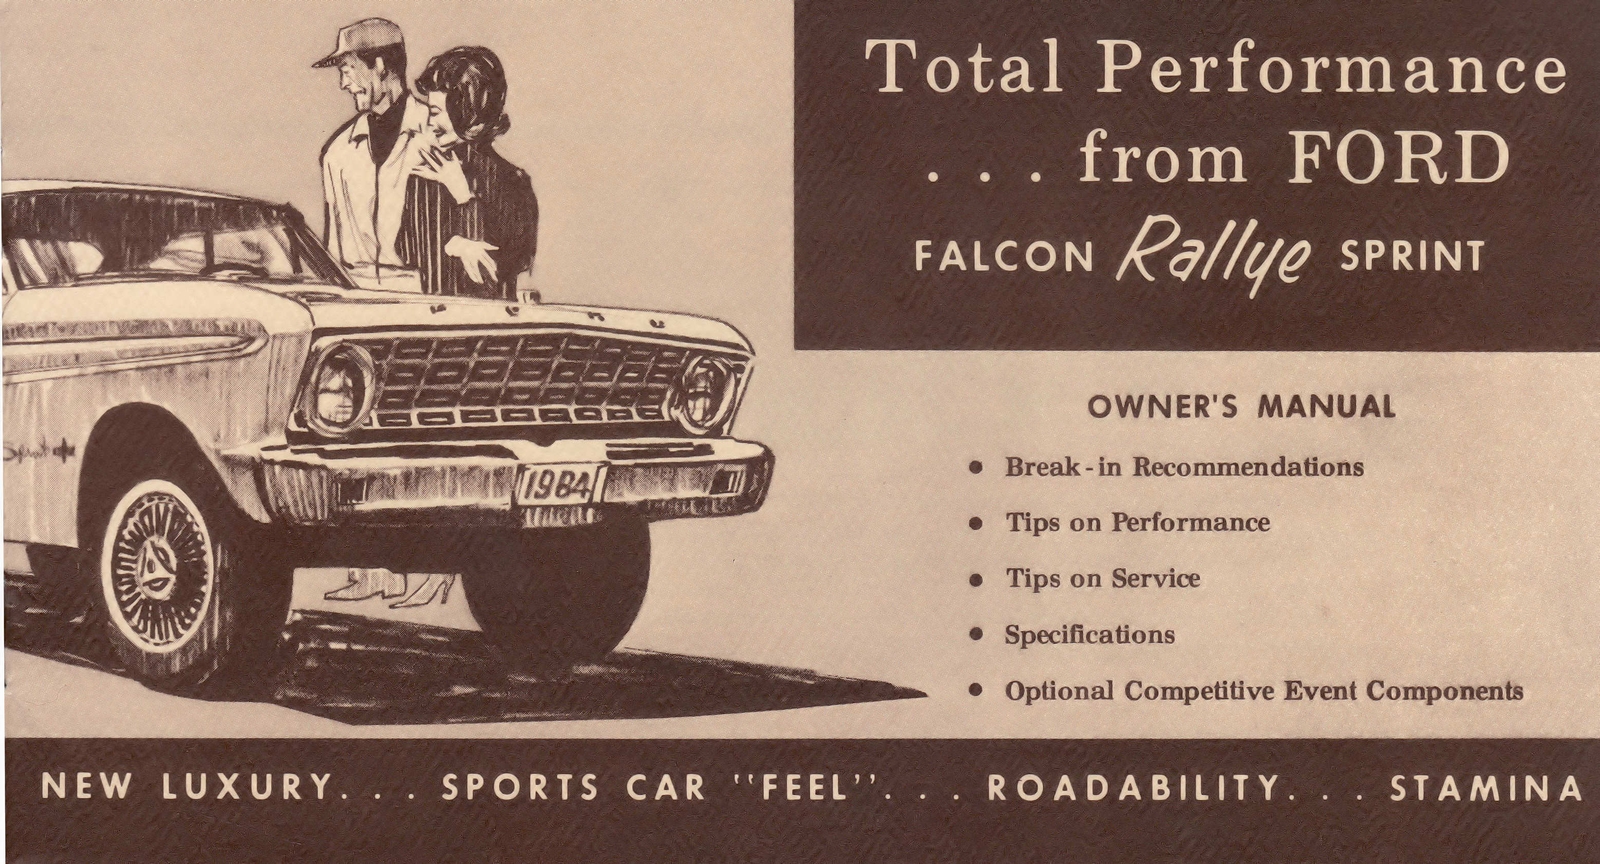 n_1964 Ford Falcon Rallye Sprint Manual-01.jpg